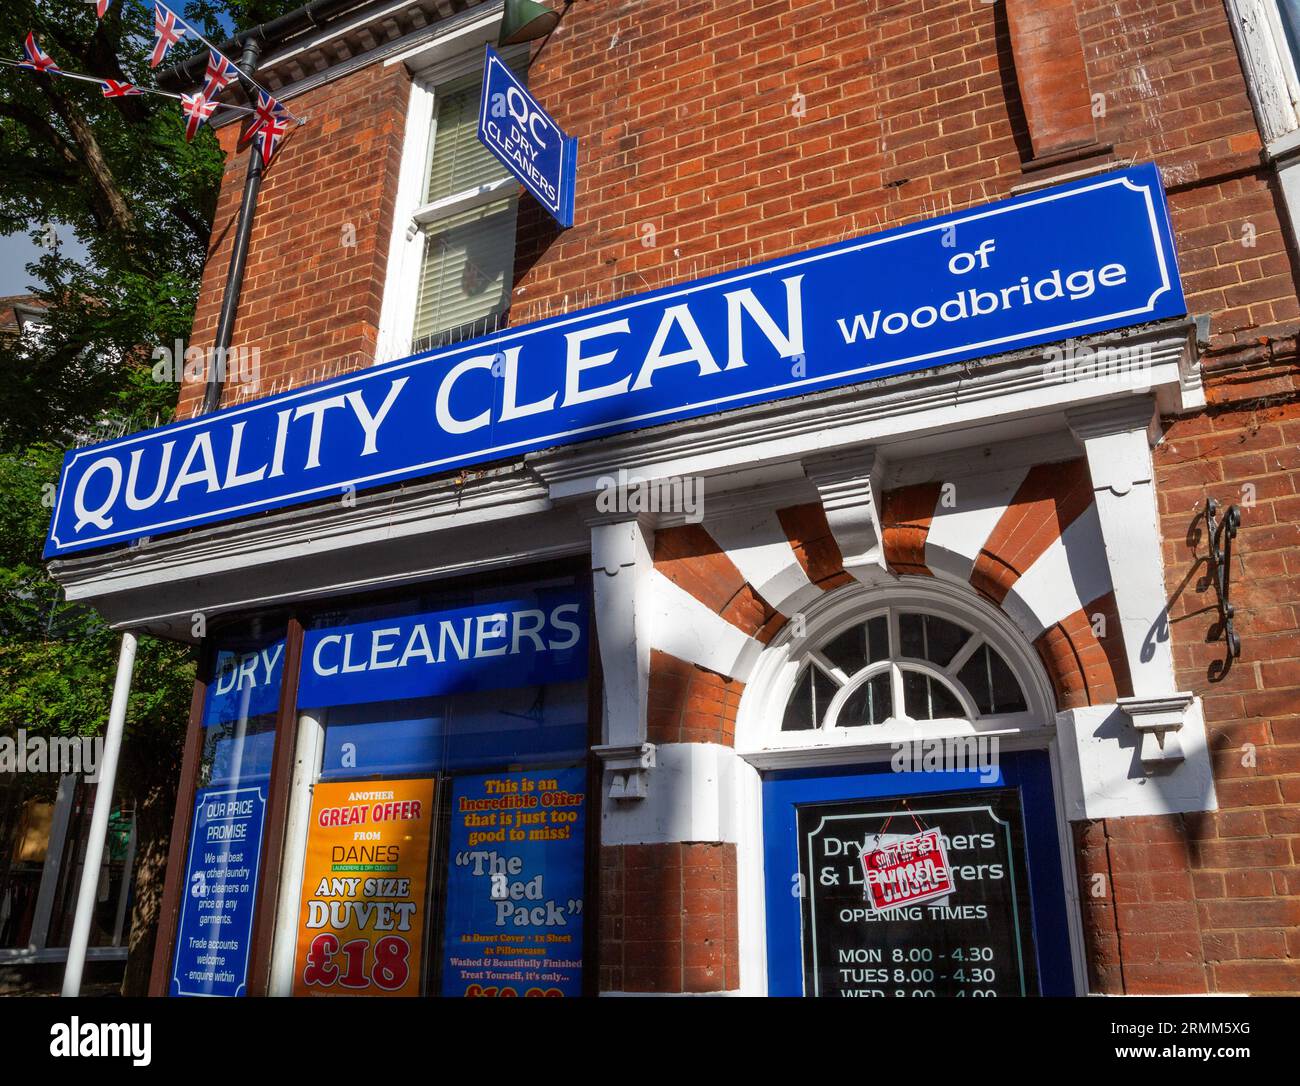 Quality Clean Dry Cleaners shop, Woodbridge, Sufffolk, England, Uk Stock Photo